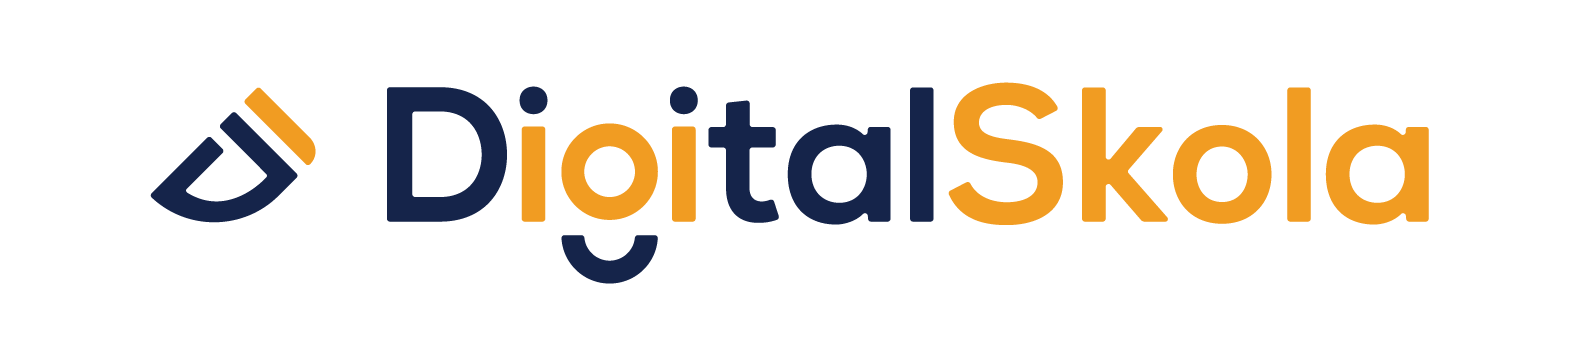 Digital Skola